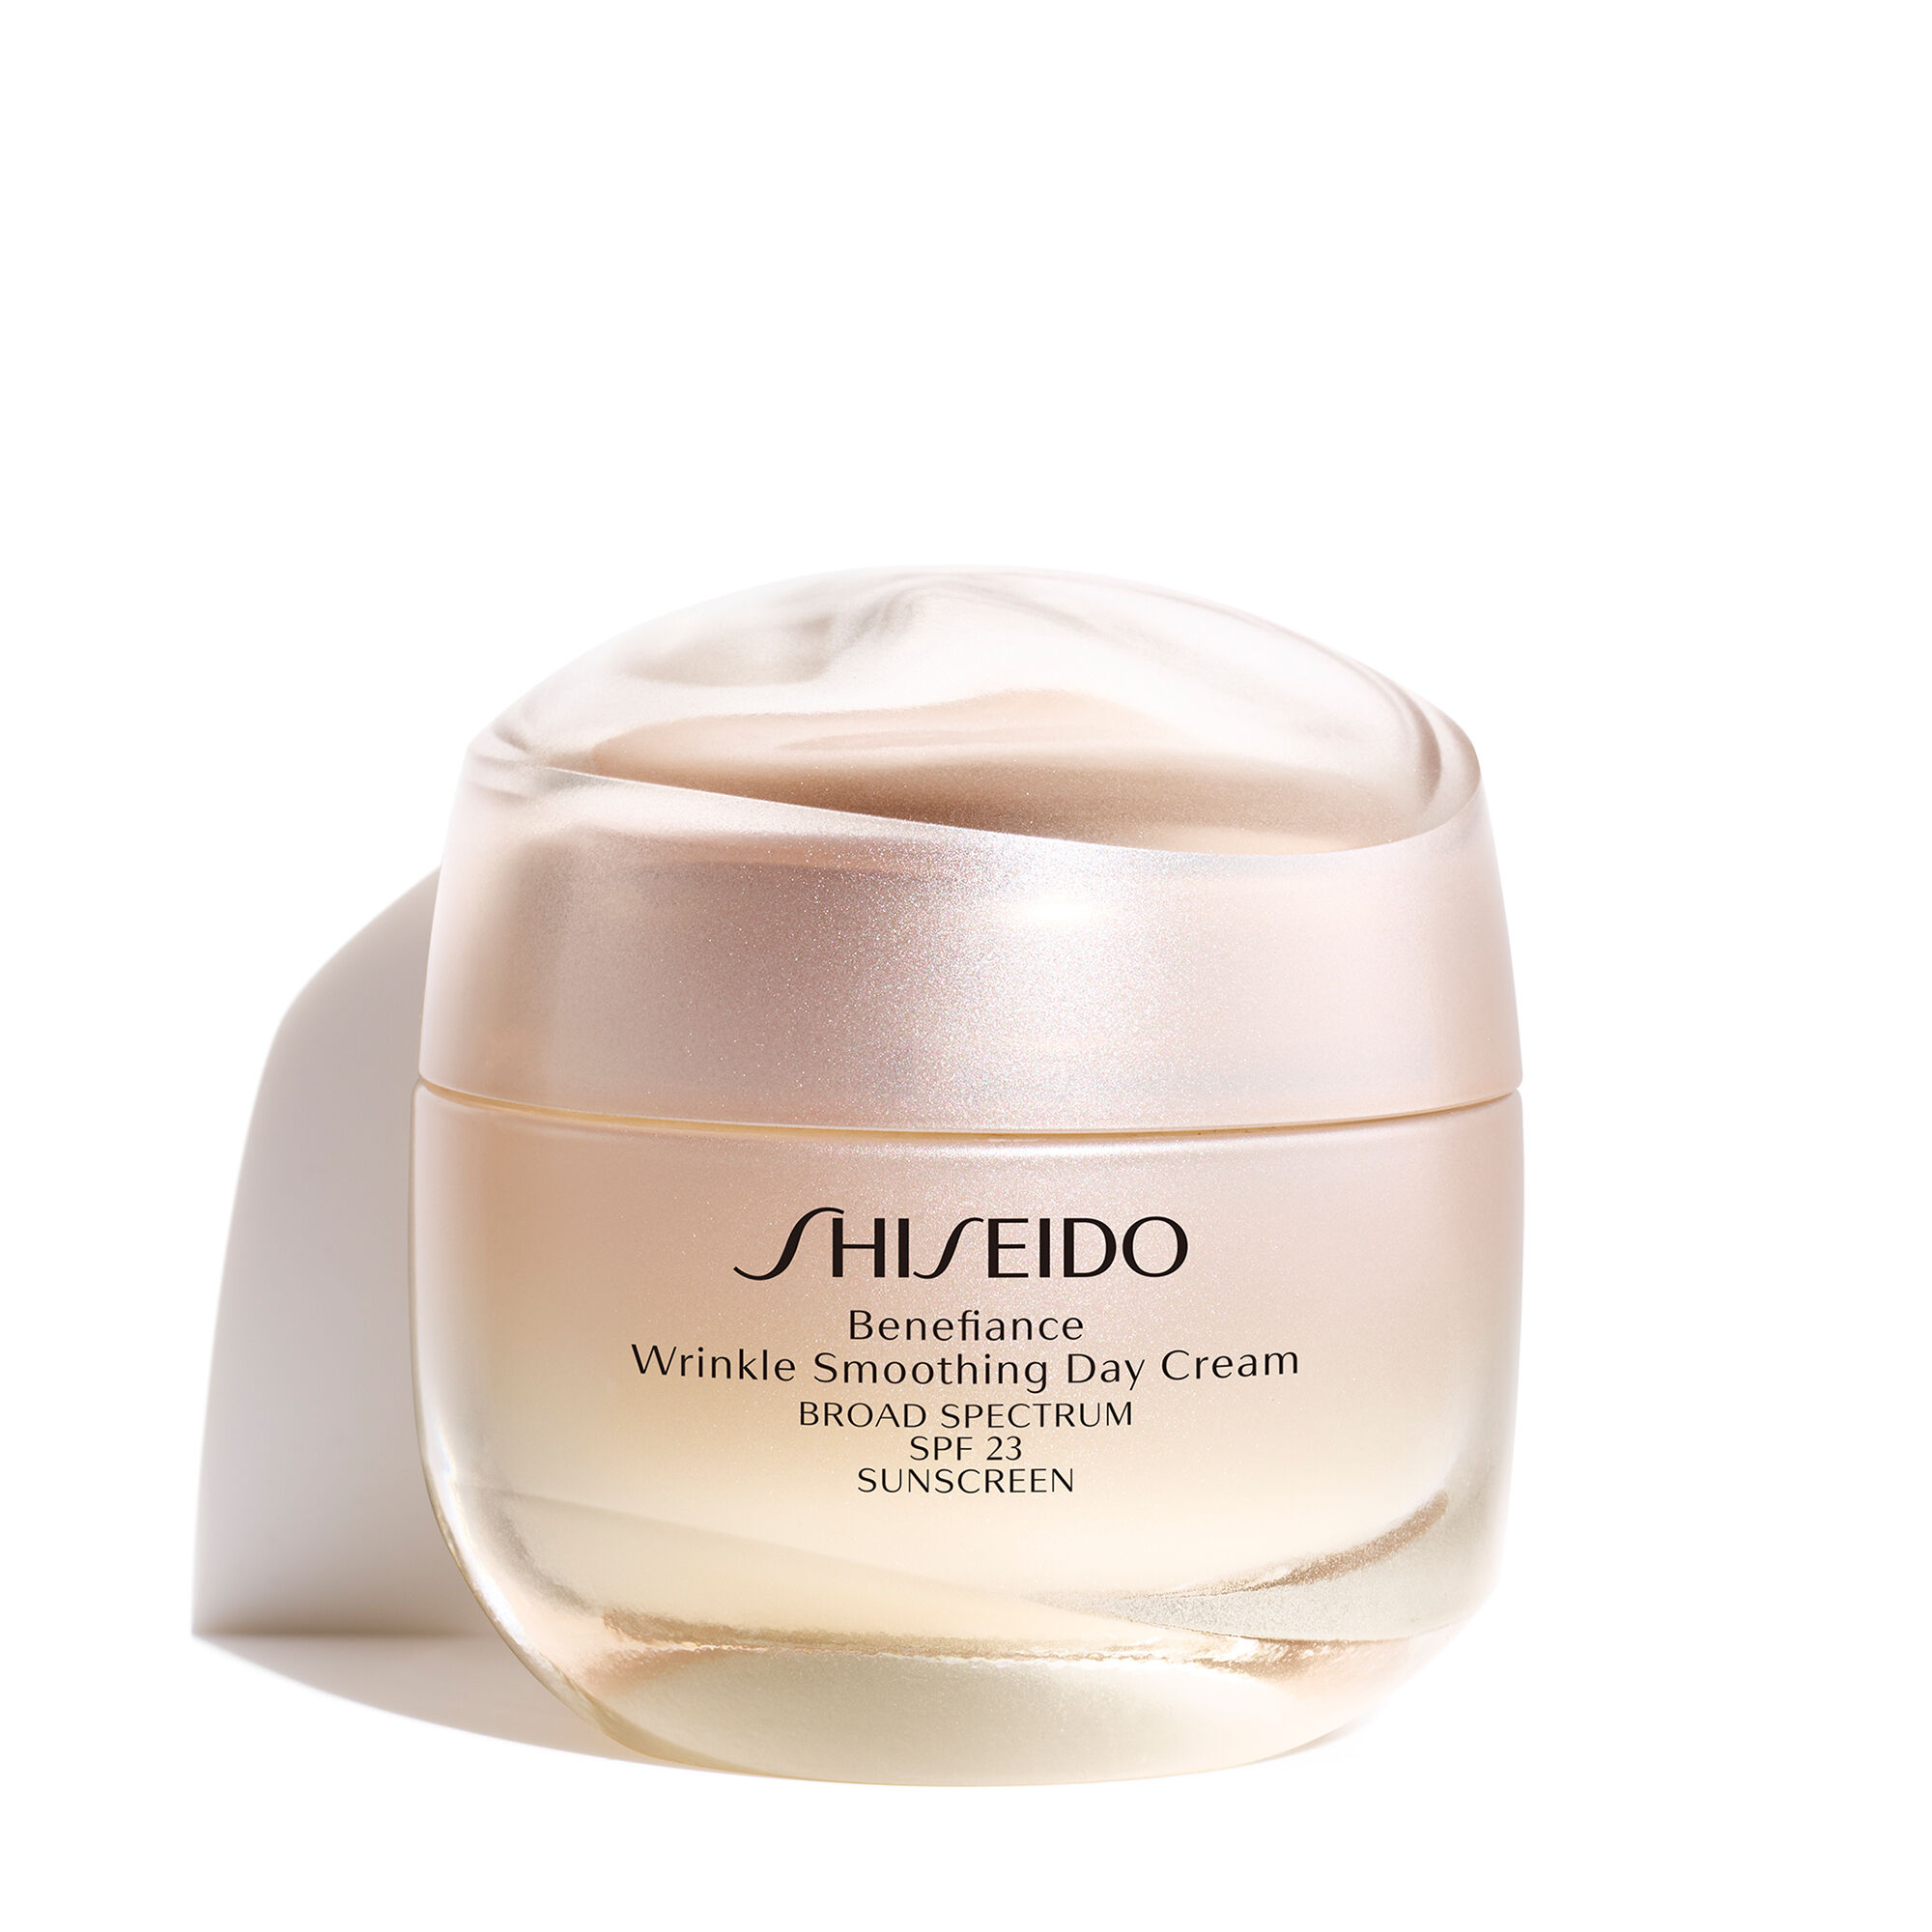 shiseido skin care